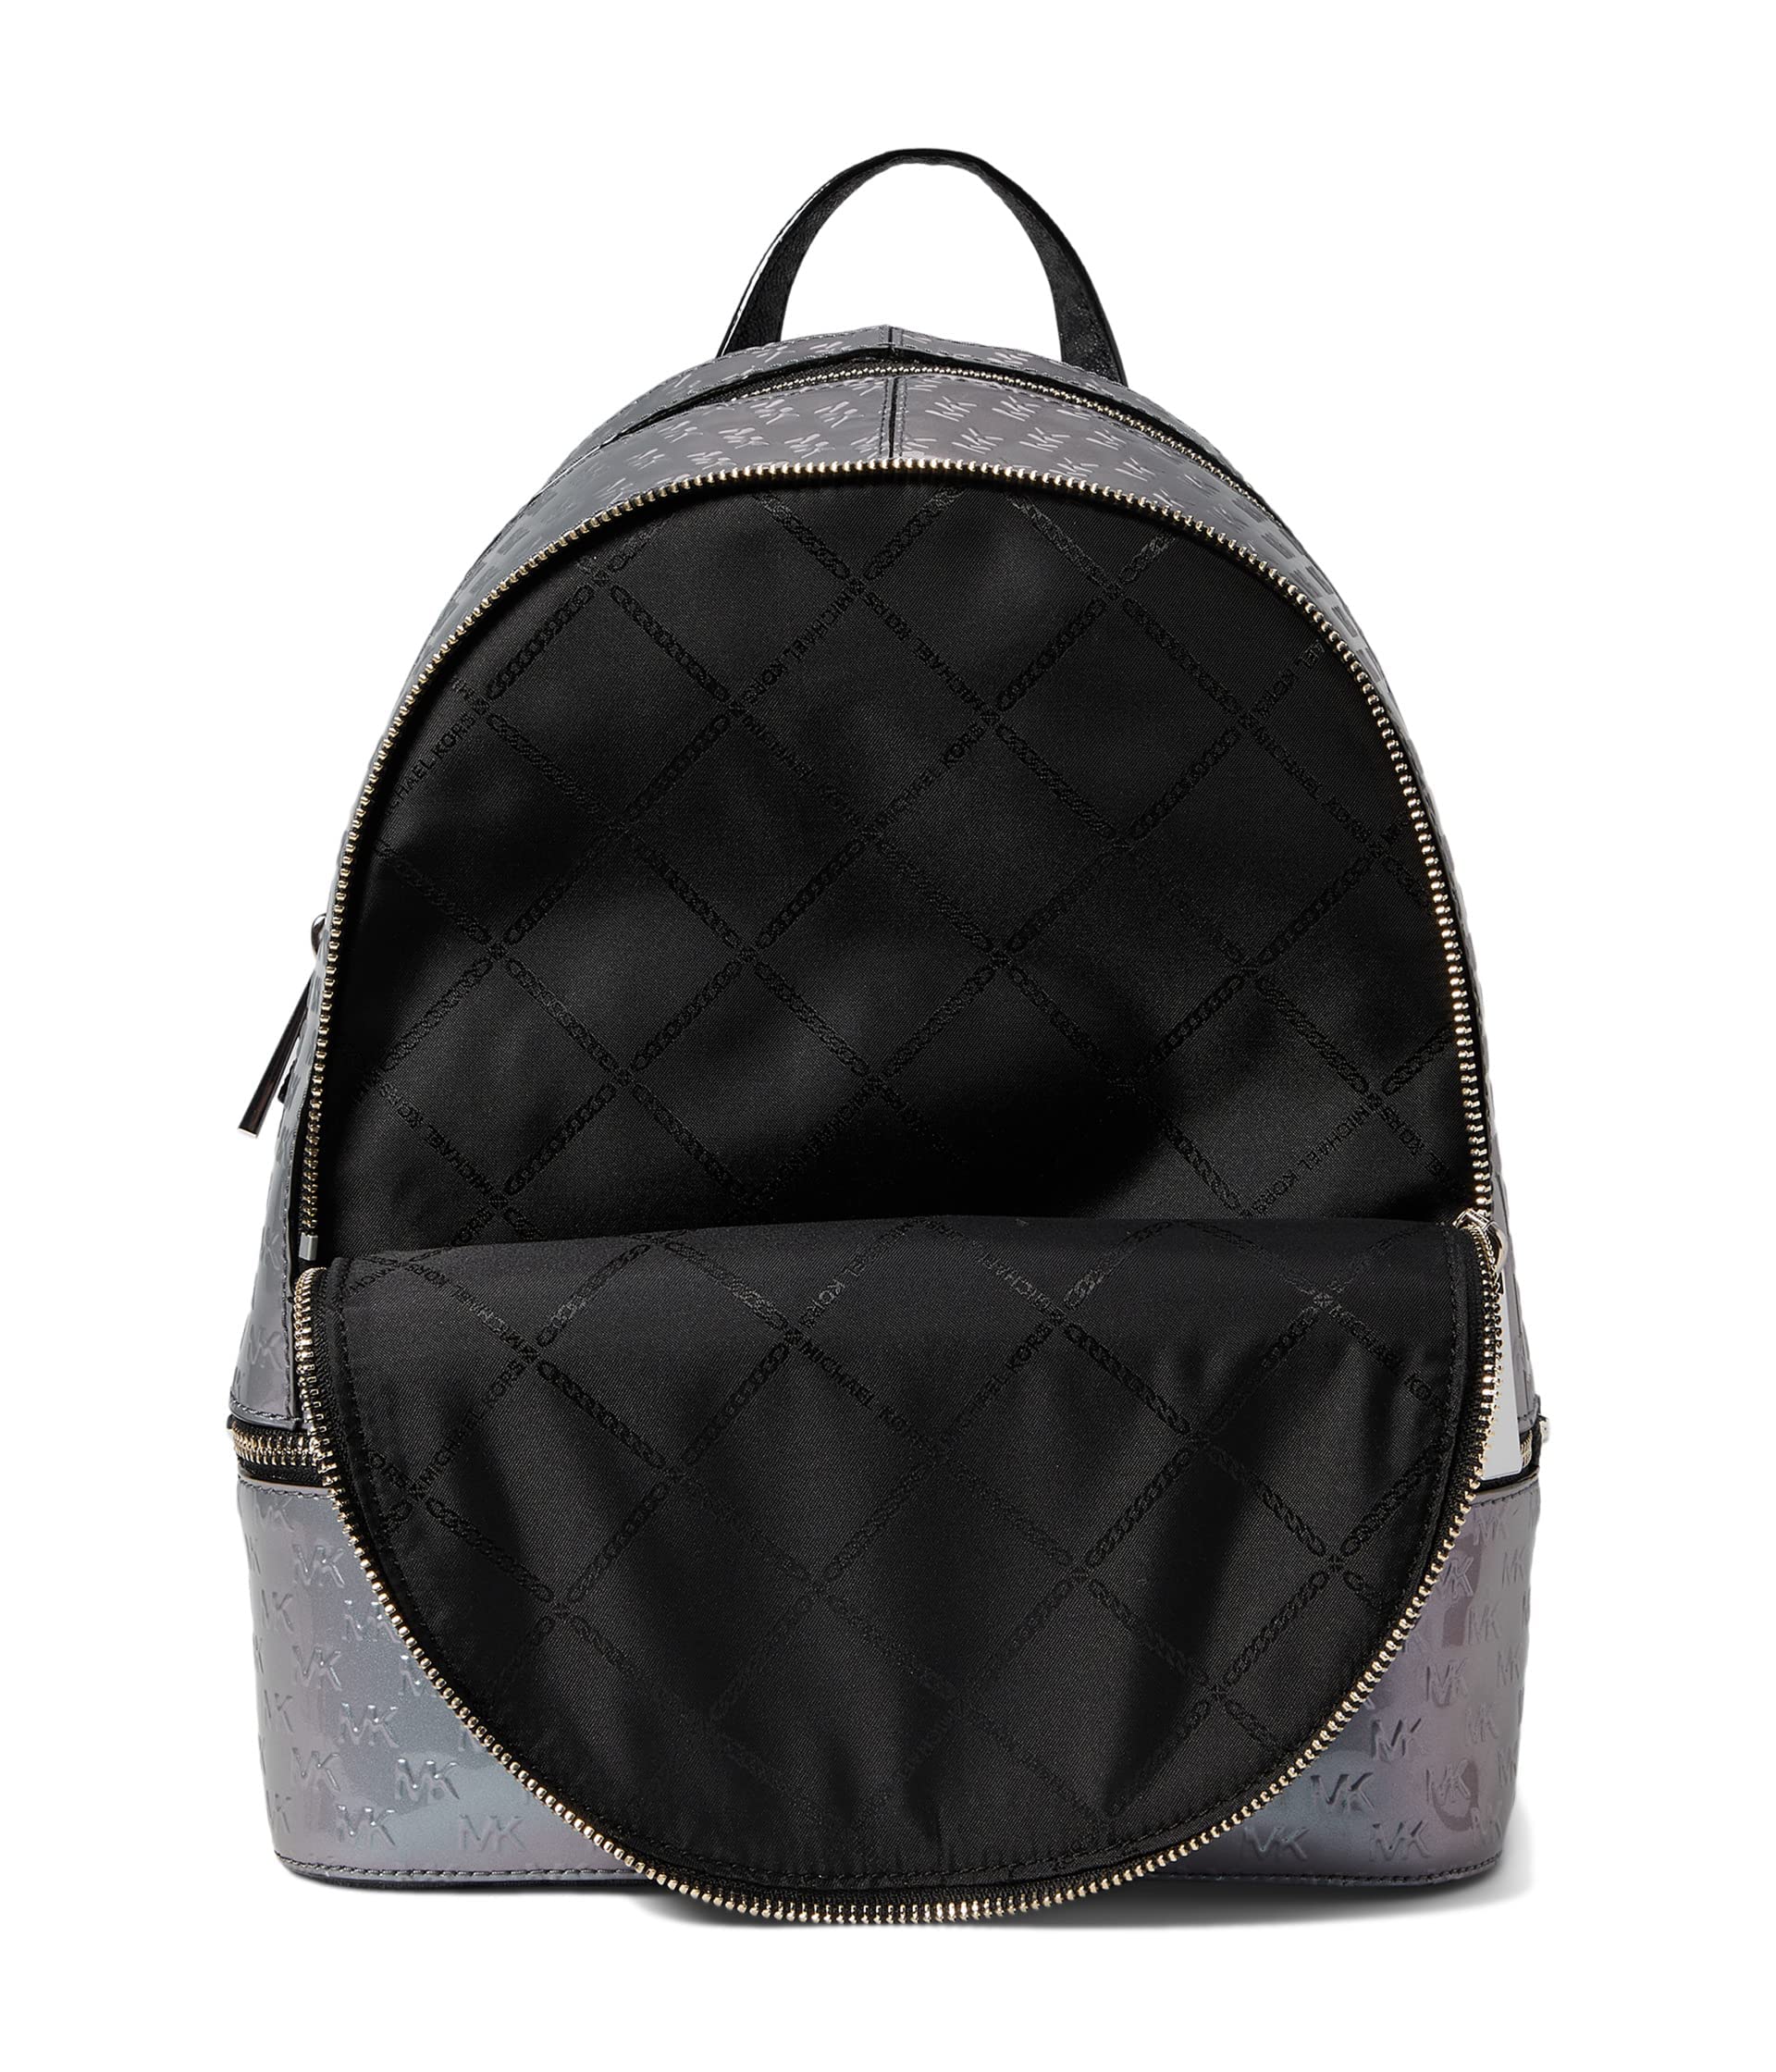 Michael Kors Backpack Handbag, Blue